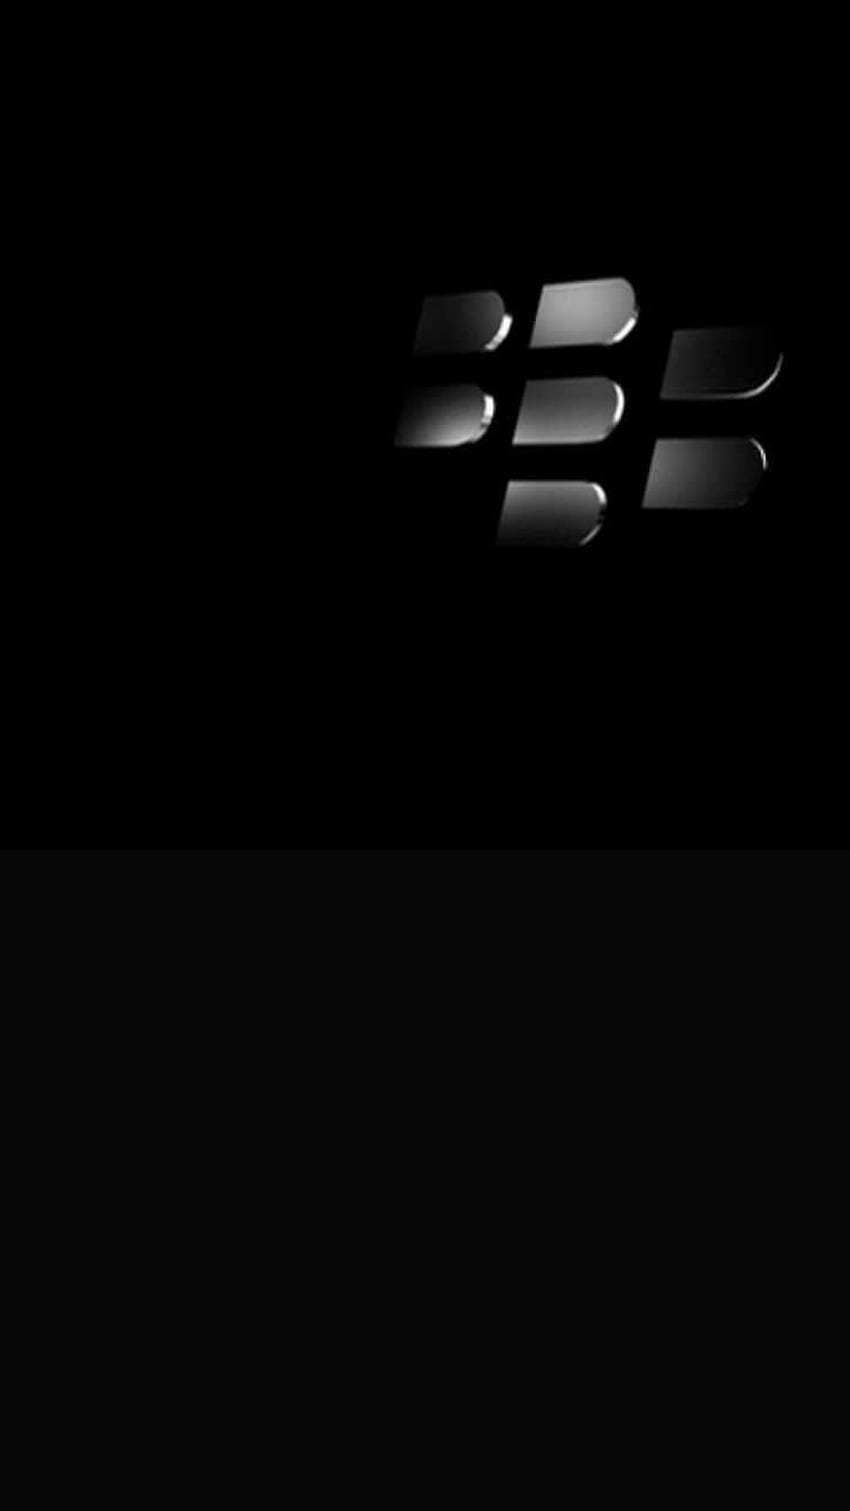 BlackBerry Curve 9360 Review! | CrackBerry